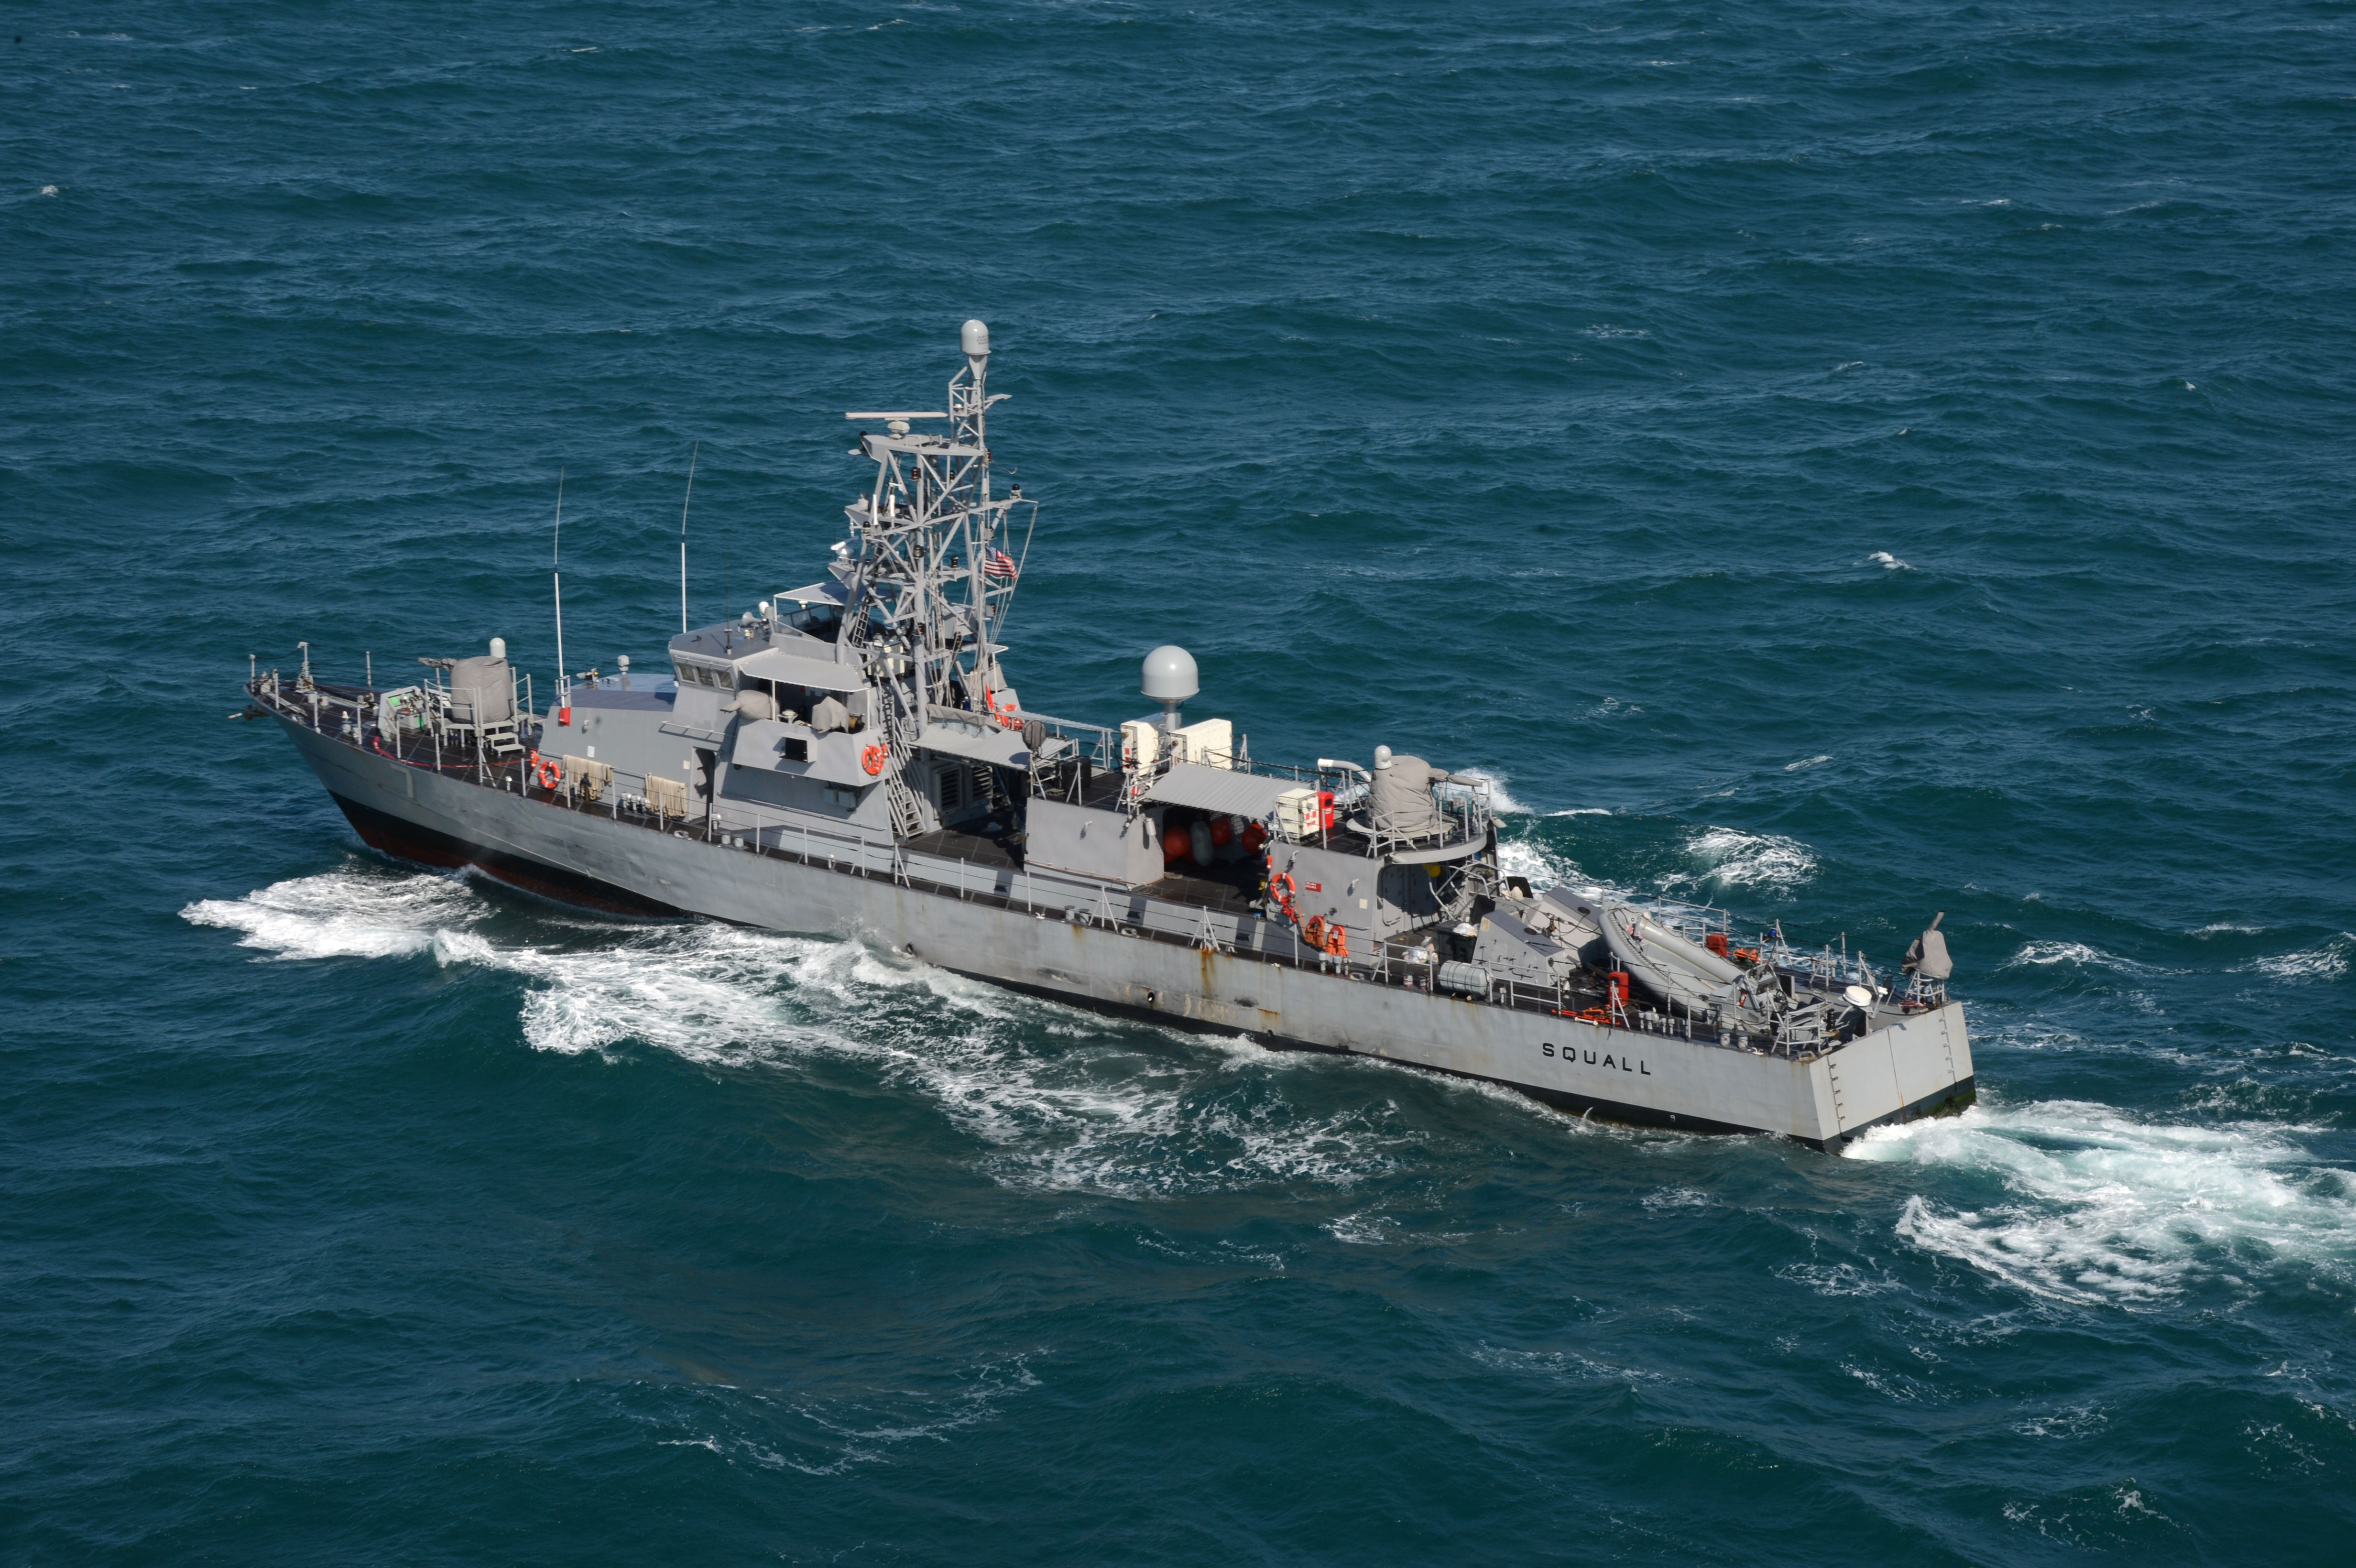 Iran vessel 'harasses,' sails close to U.S. Navy ship in Persian Gulf: U.S. officials